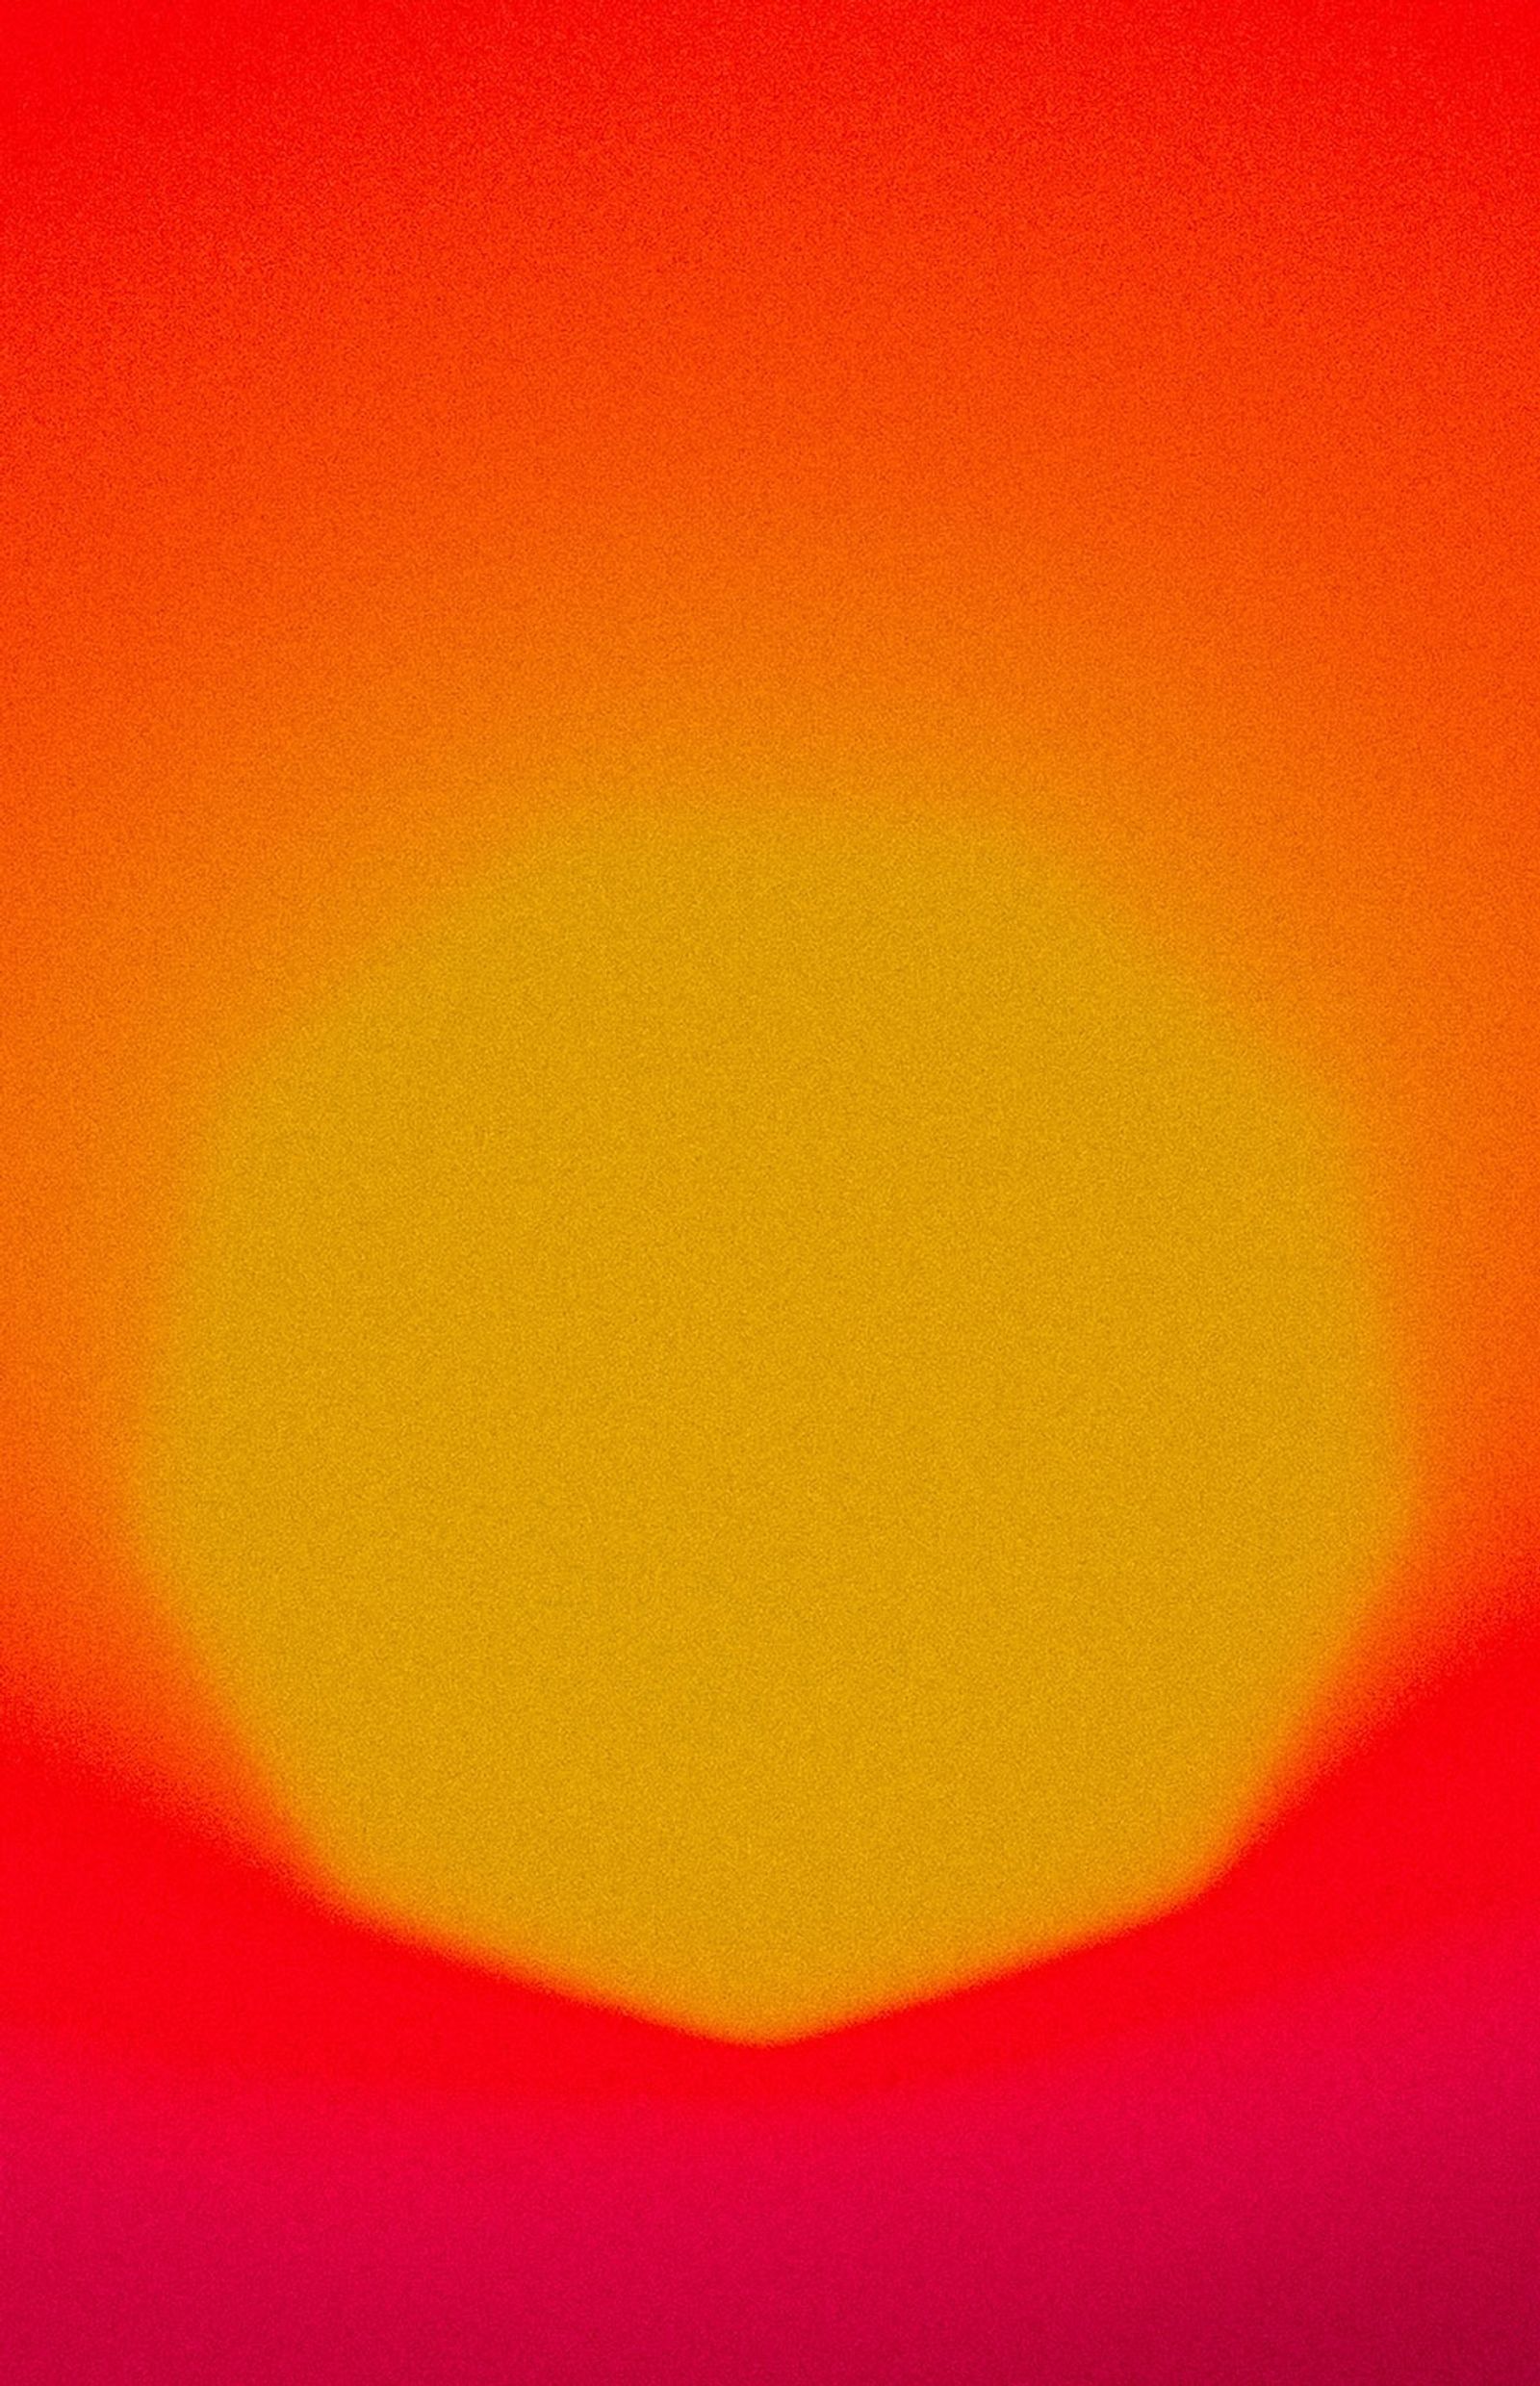 © Orianne Ciantar Olive - Red sun, blue sun, green sun. Solarized color image.